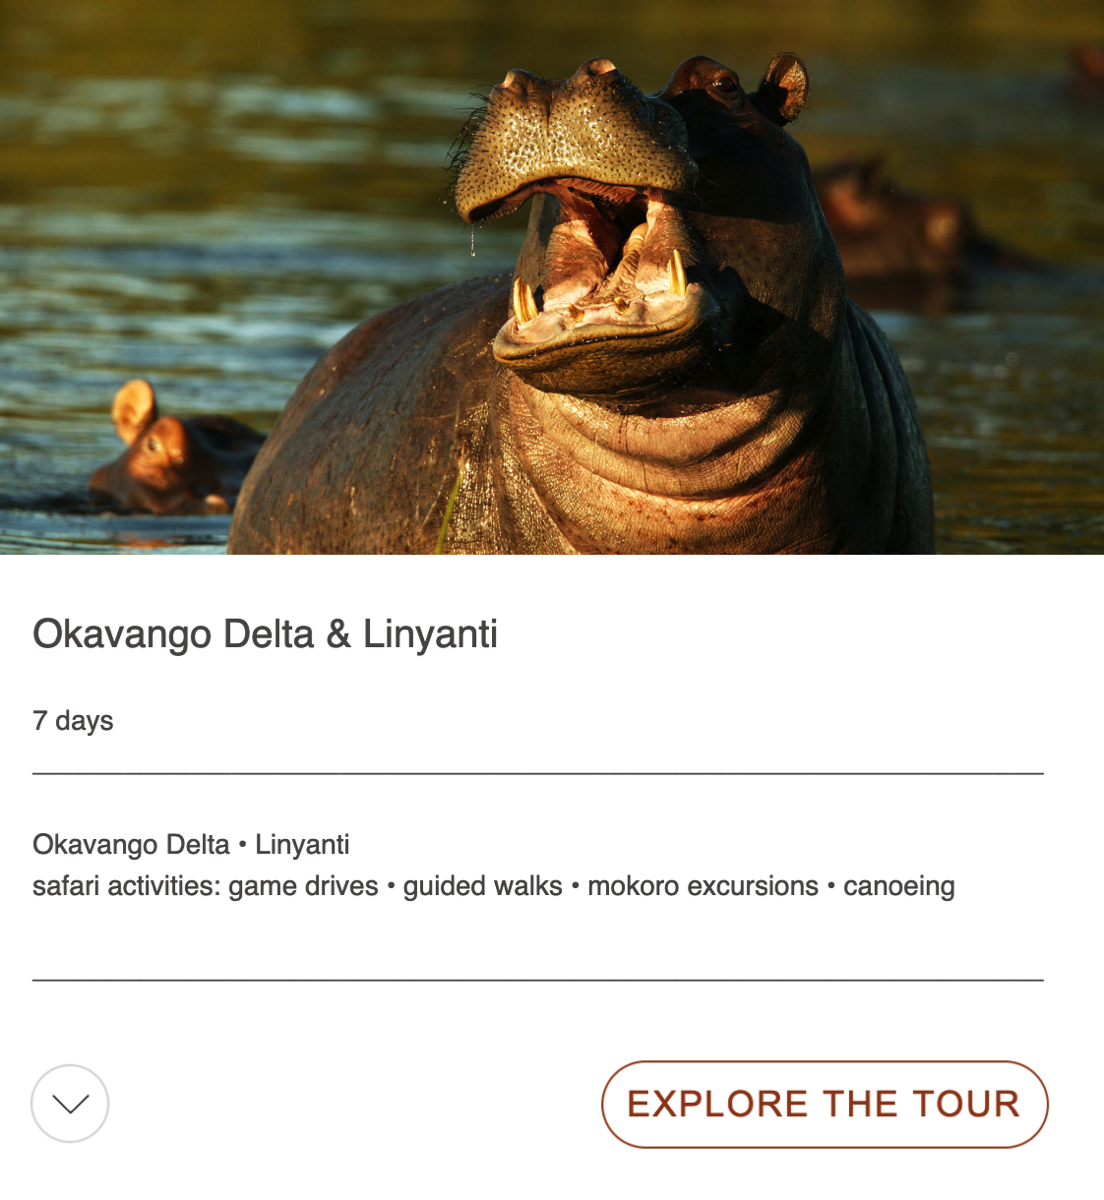 okavango delta and linyanti tour